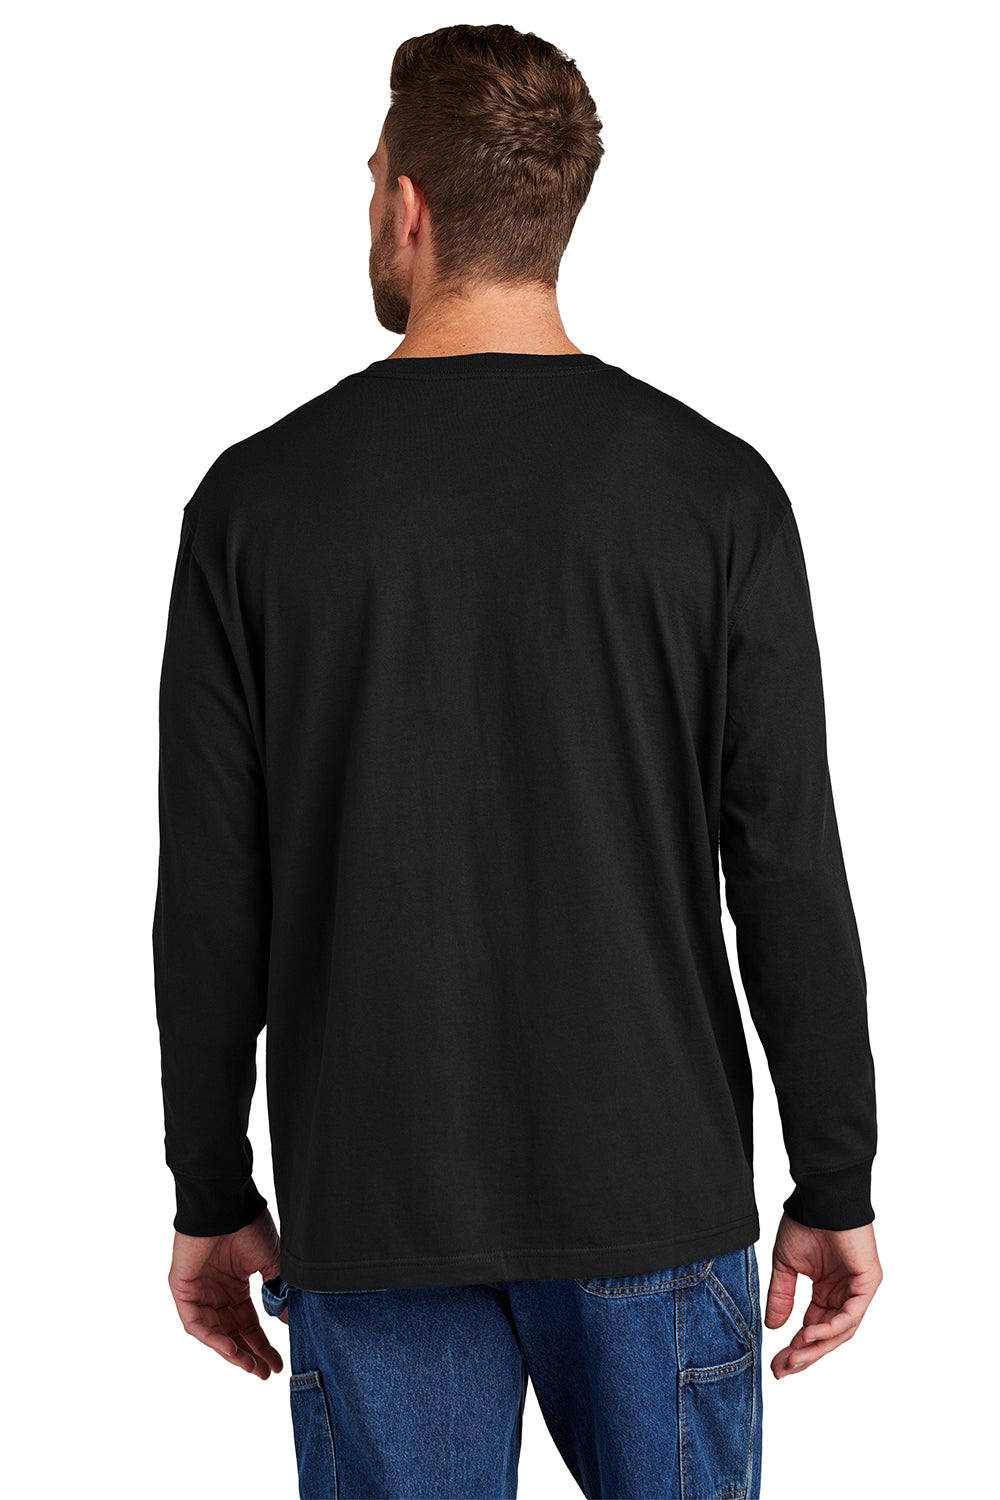 Carhartt CTK126 Mens Workwear Long Sleeve Crewneck T-Shirt w/ Pocket Black Model Back